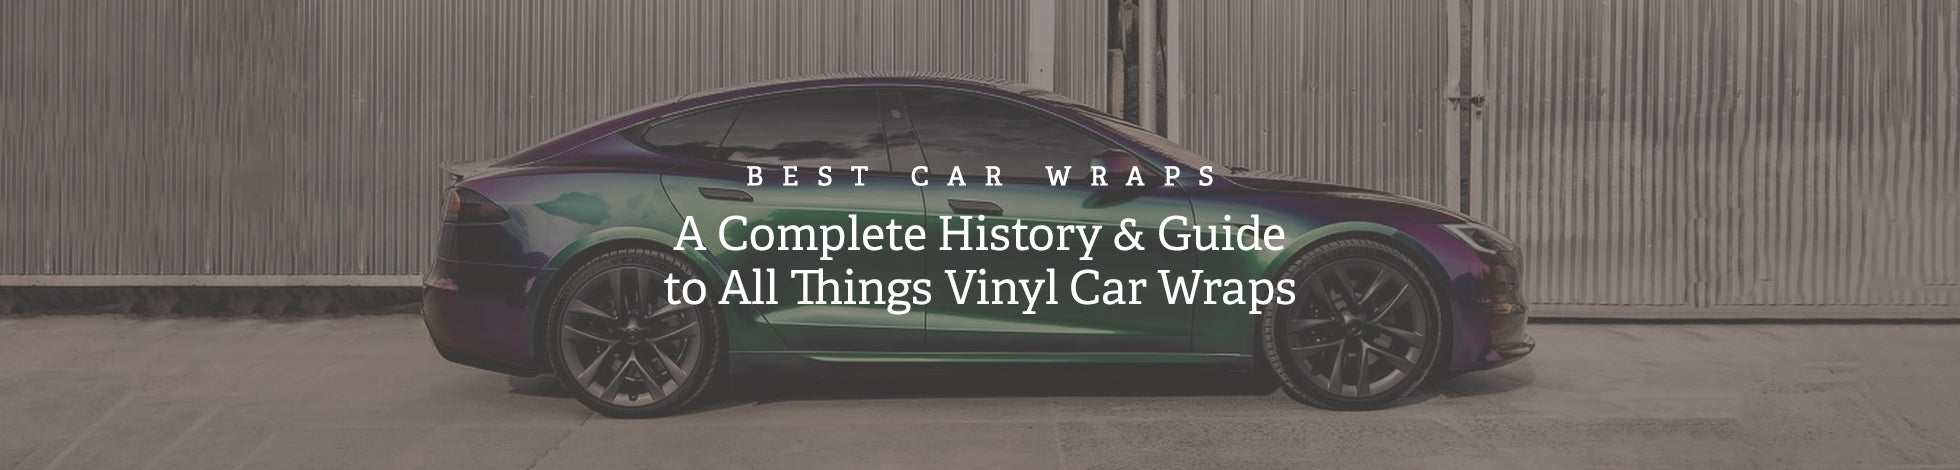 How to Prep Car for Vinyl Wrap: 5 Essential Tips